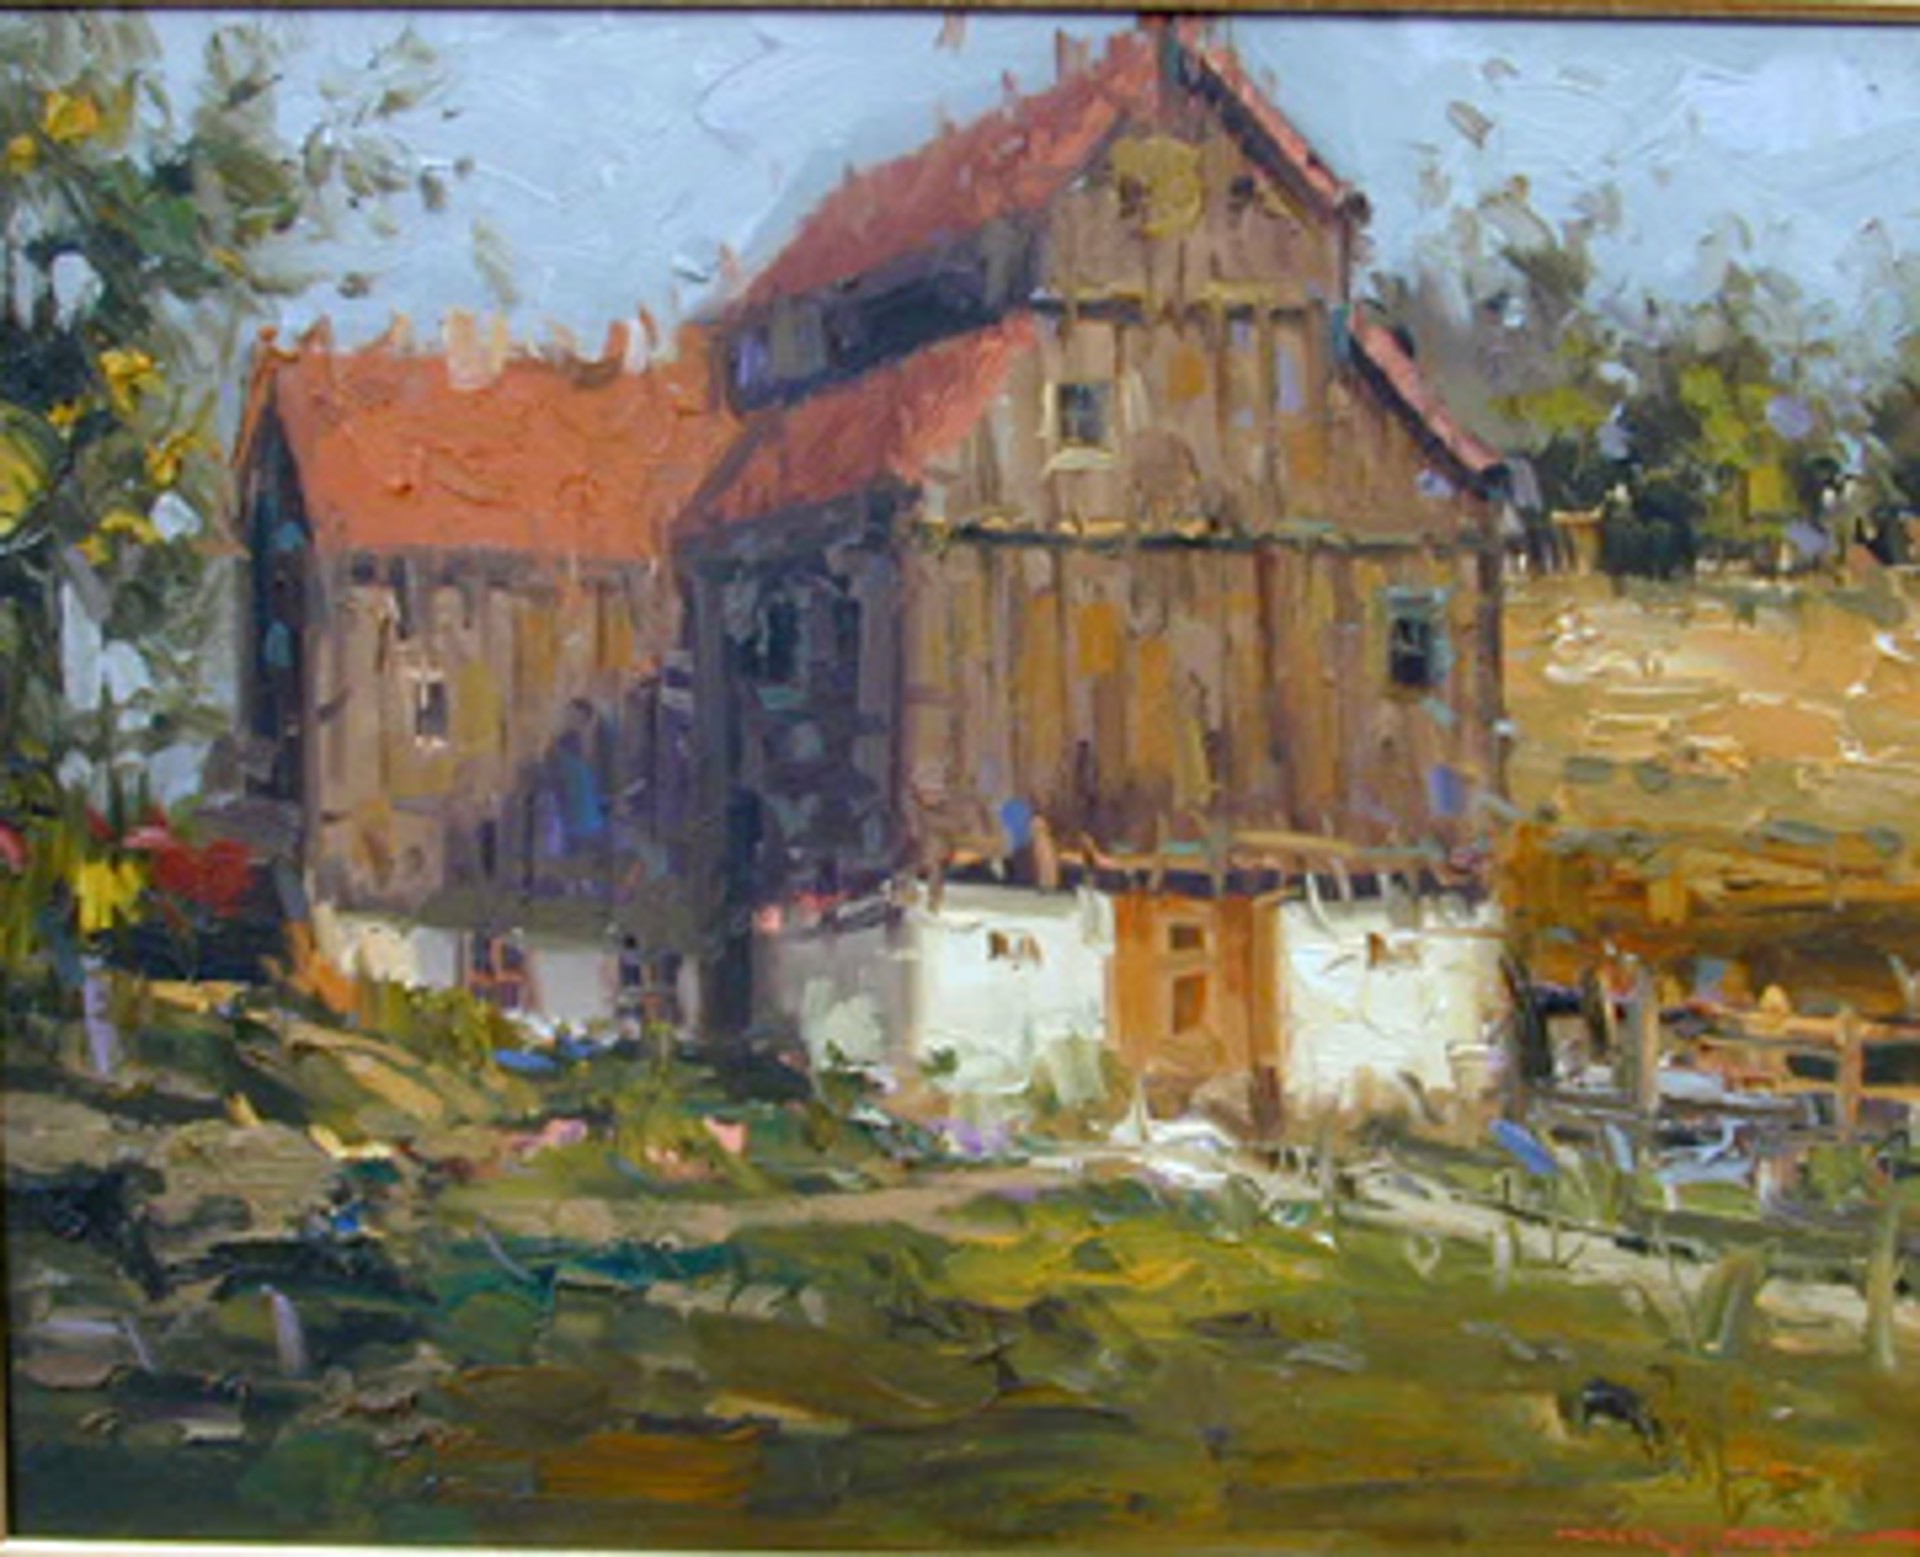 The Old Barn by Mostafa Keyhani